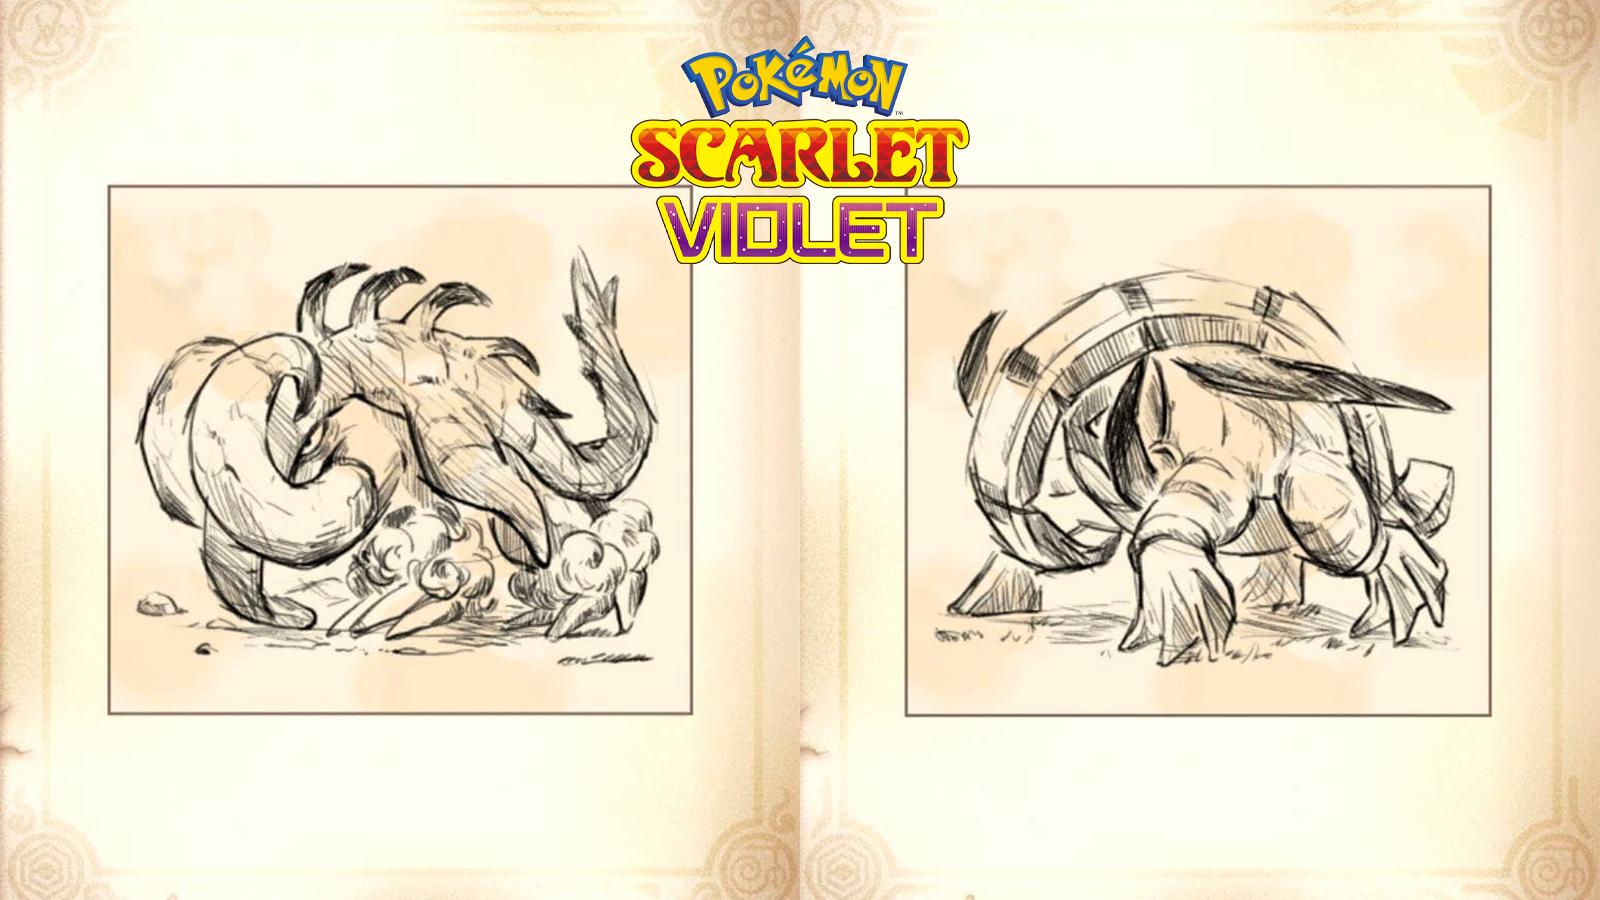 Pokemon Scarlet & Violet: All Violet Exclusive Pokemon